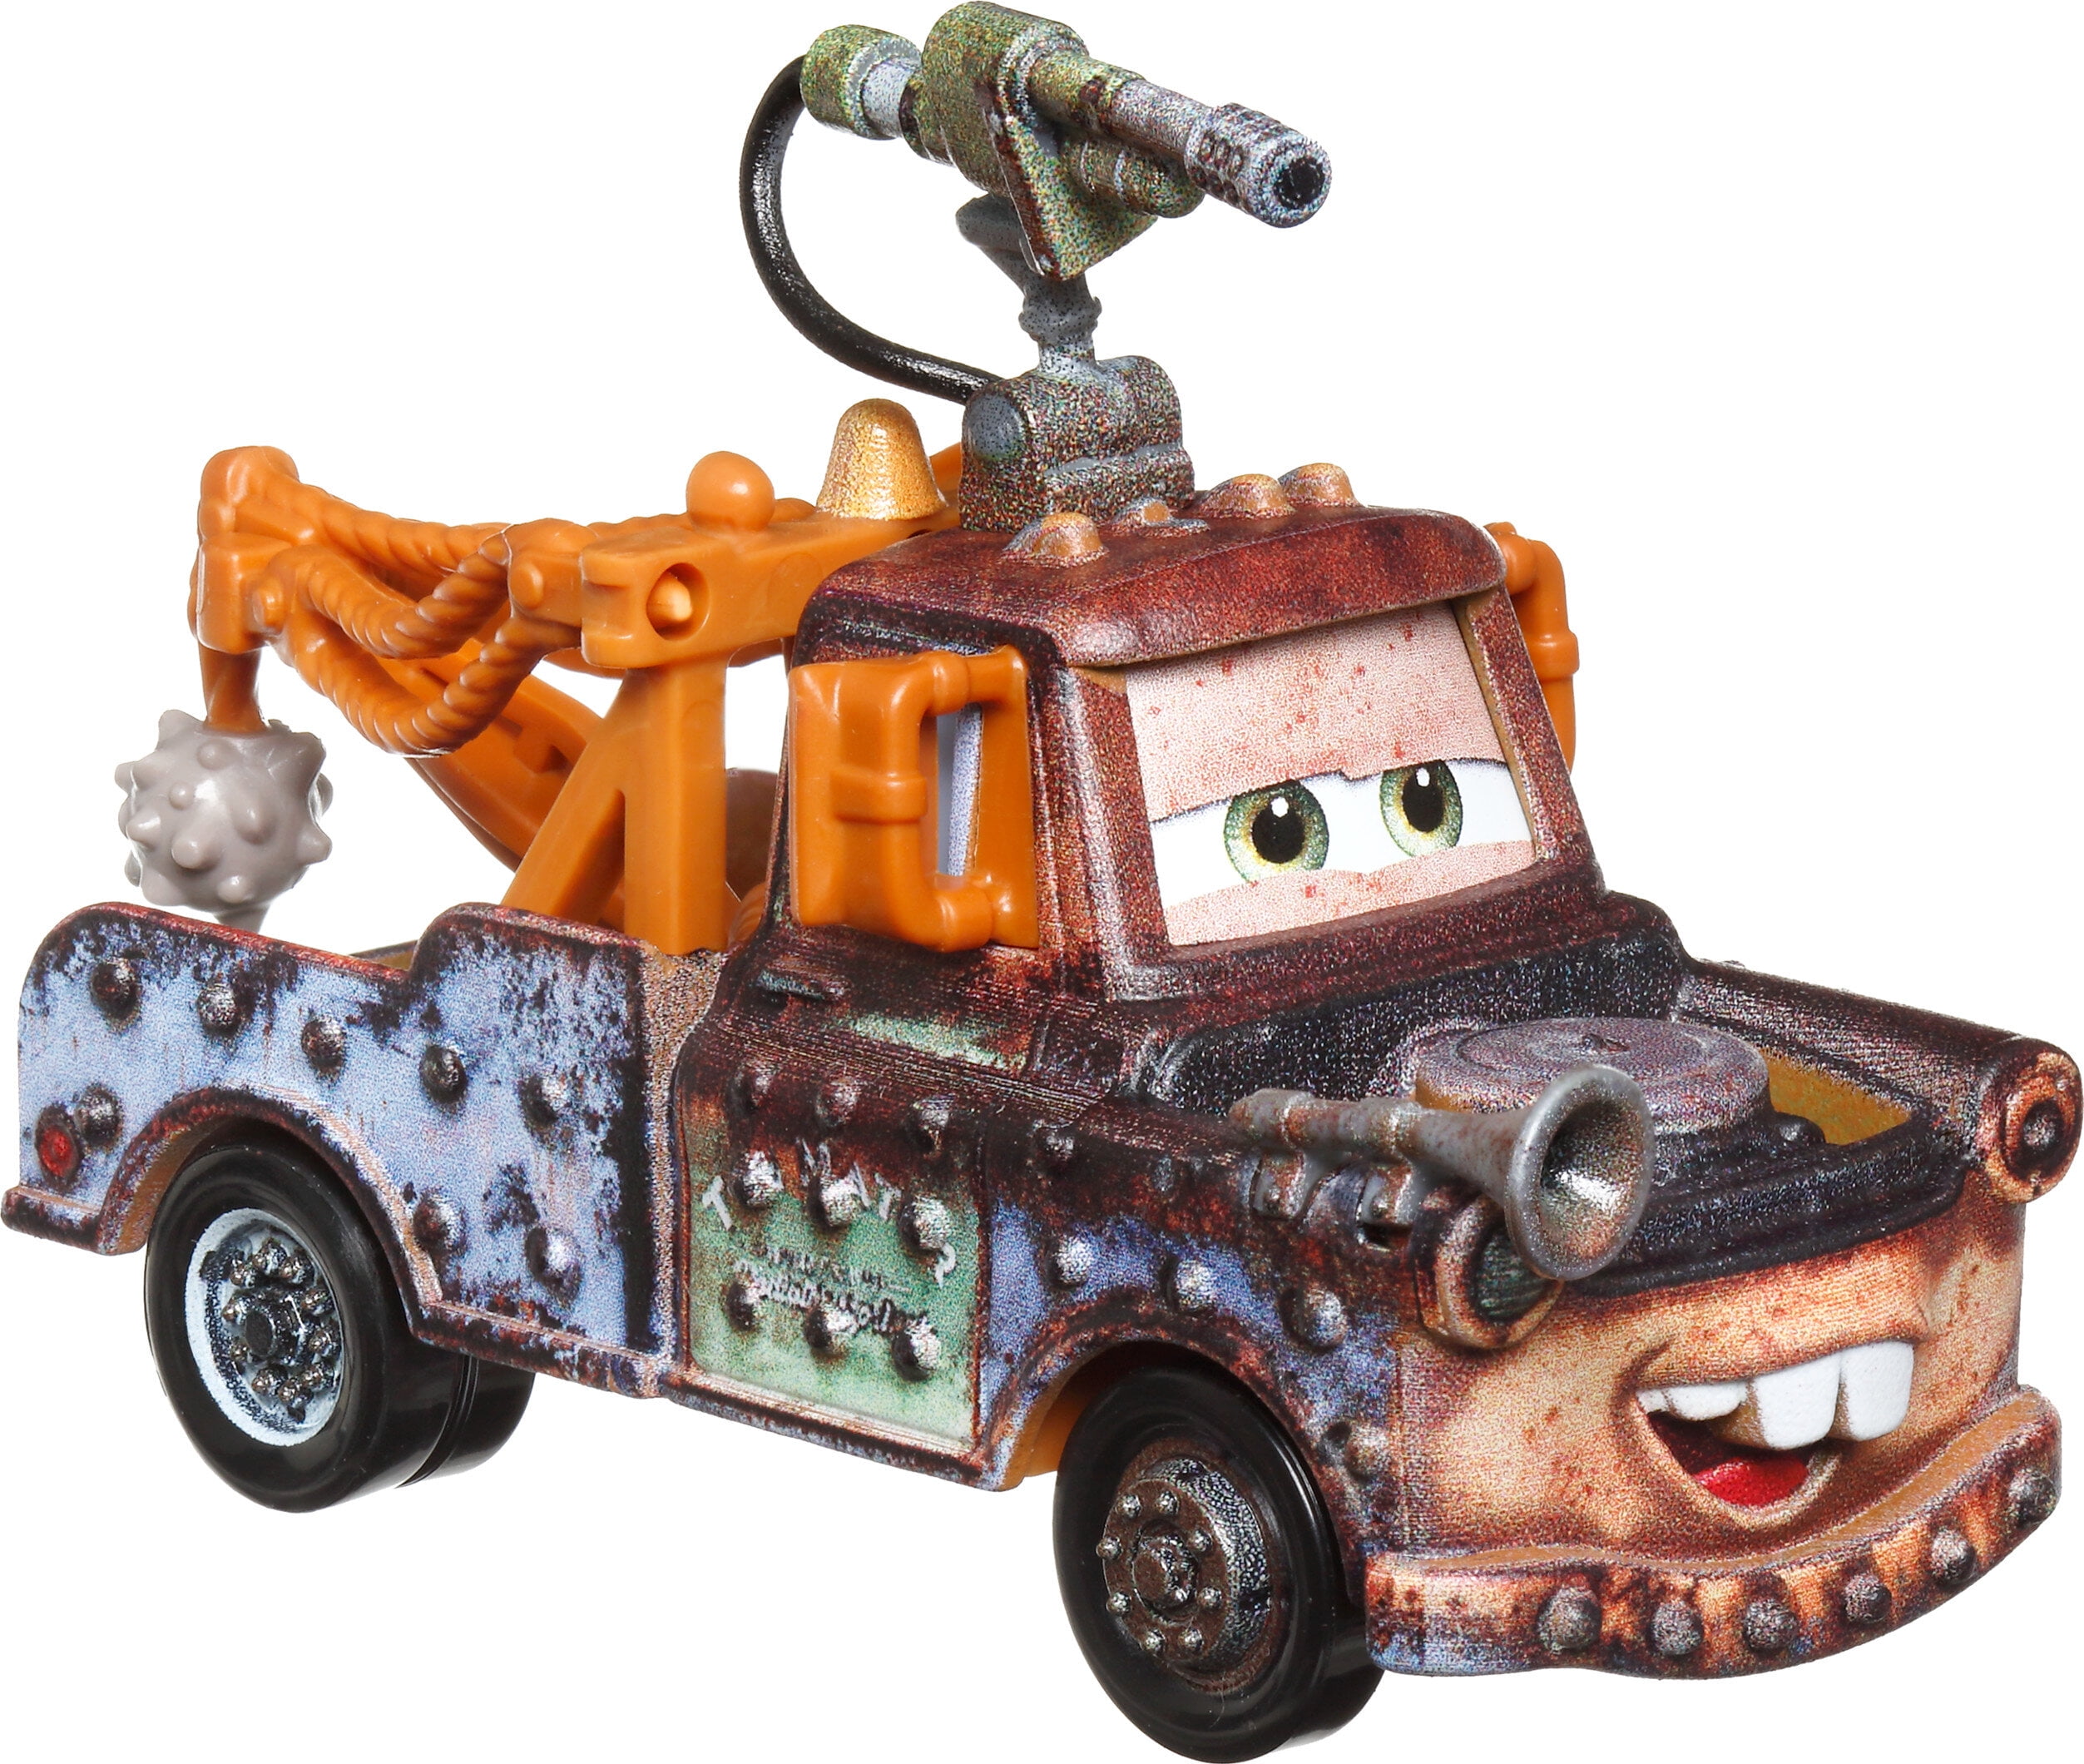 1:55 Cars Pixar Disney Scale Die-Cast Vehicles and